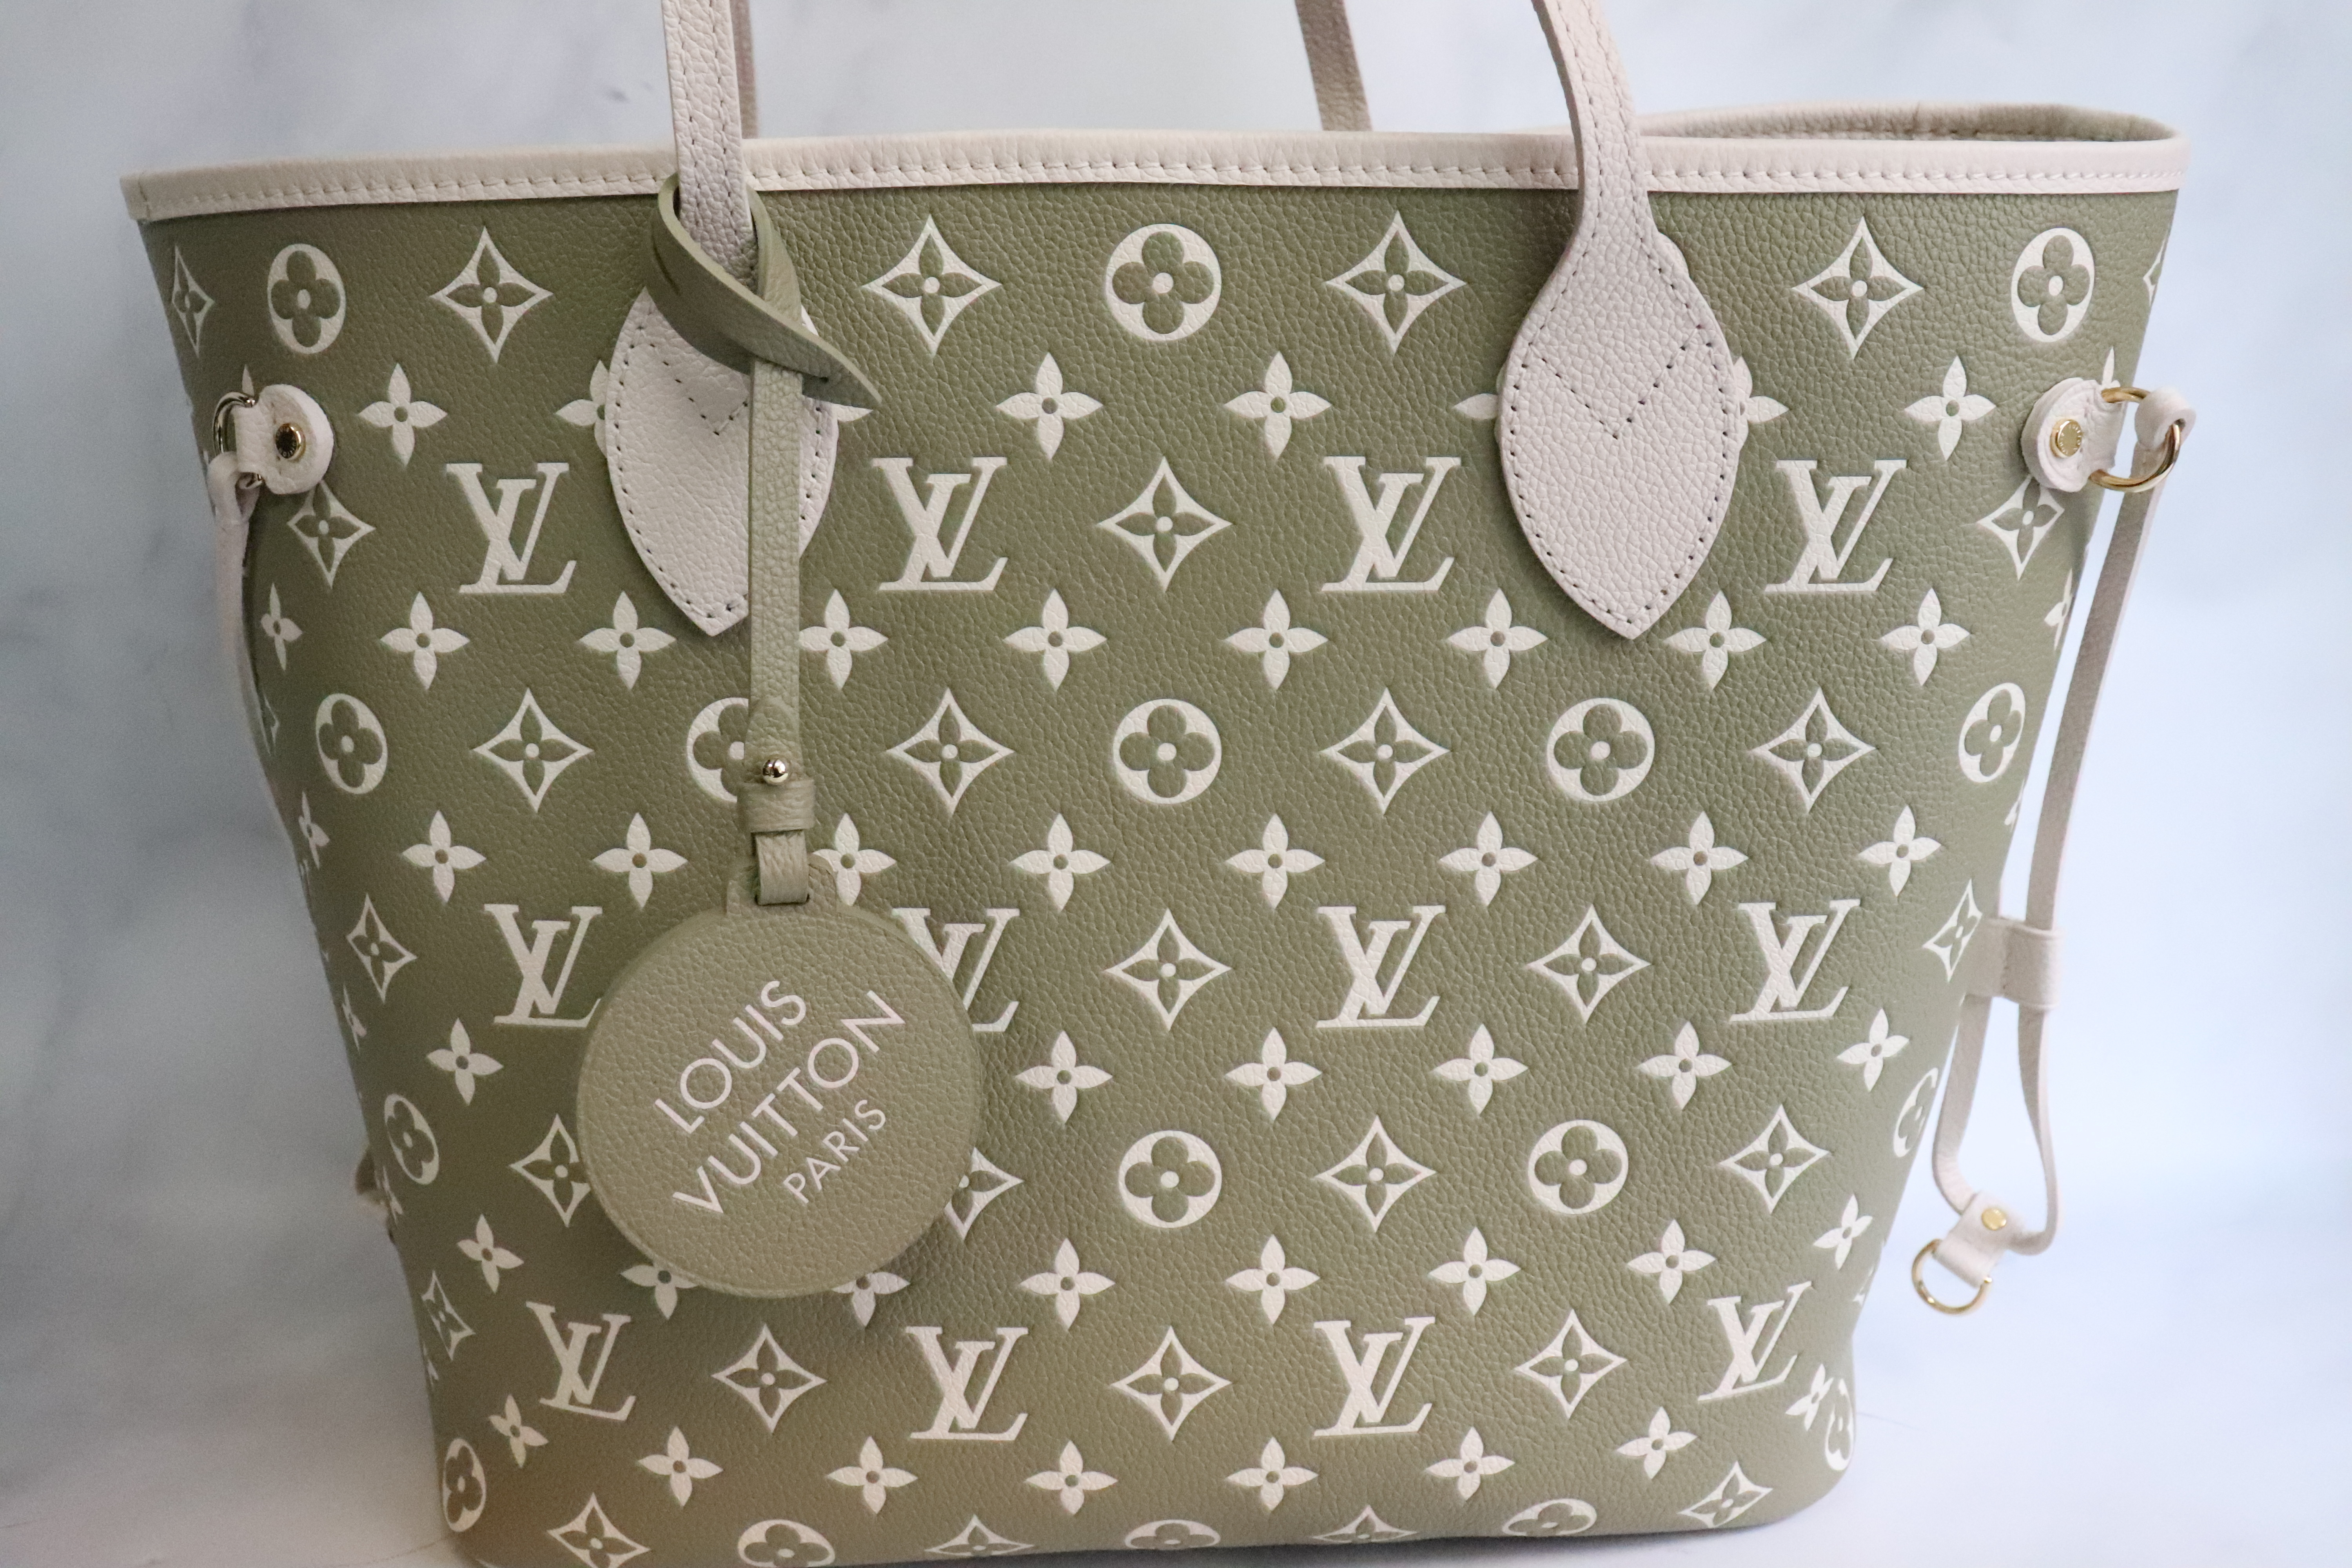 Louis Vuitton Neverfull mm Khaki Cream Monogram Empreinte